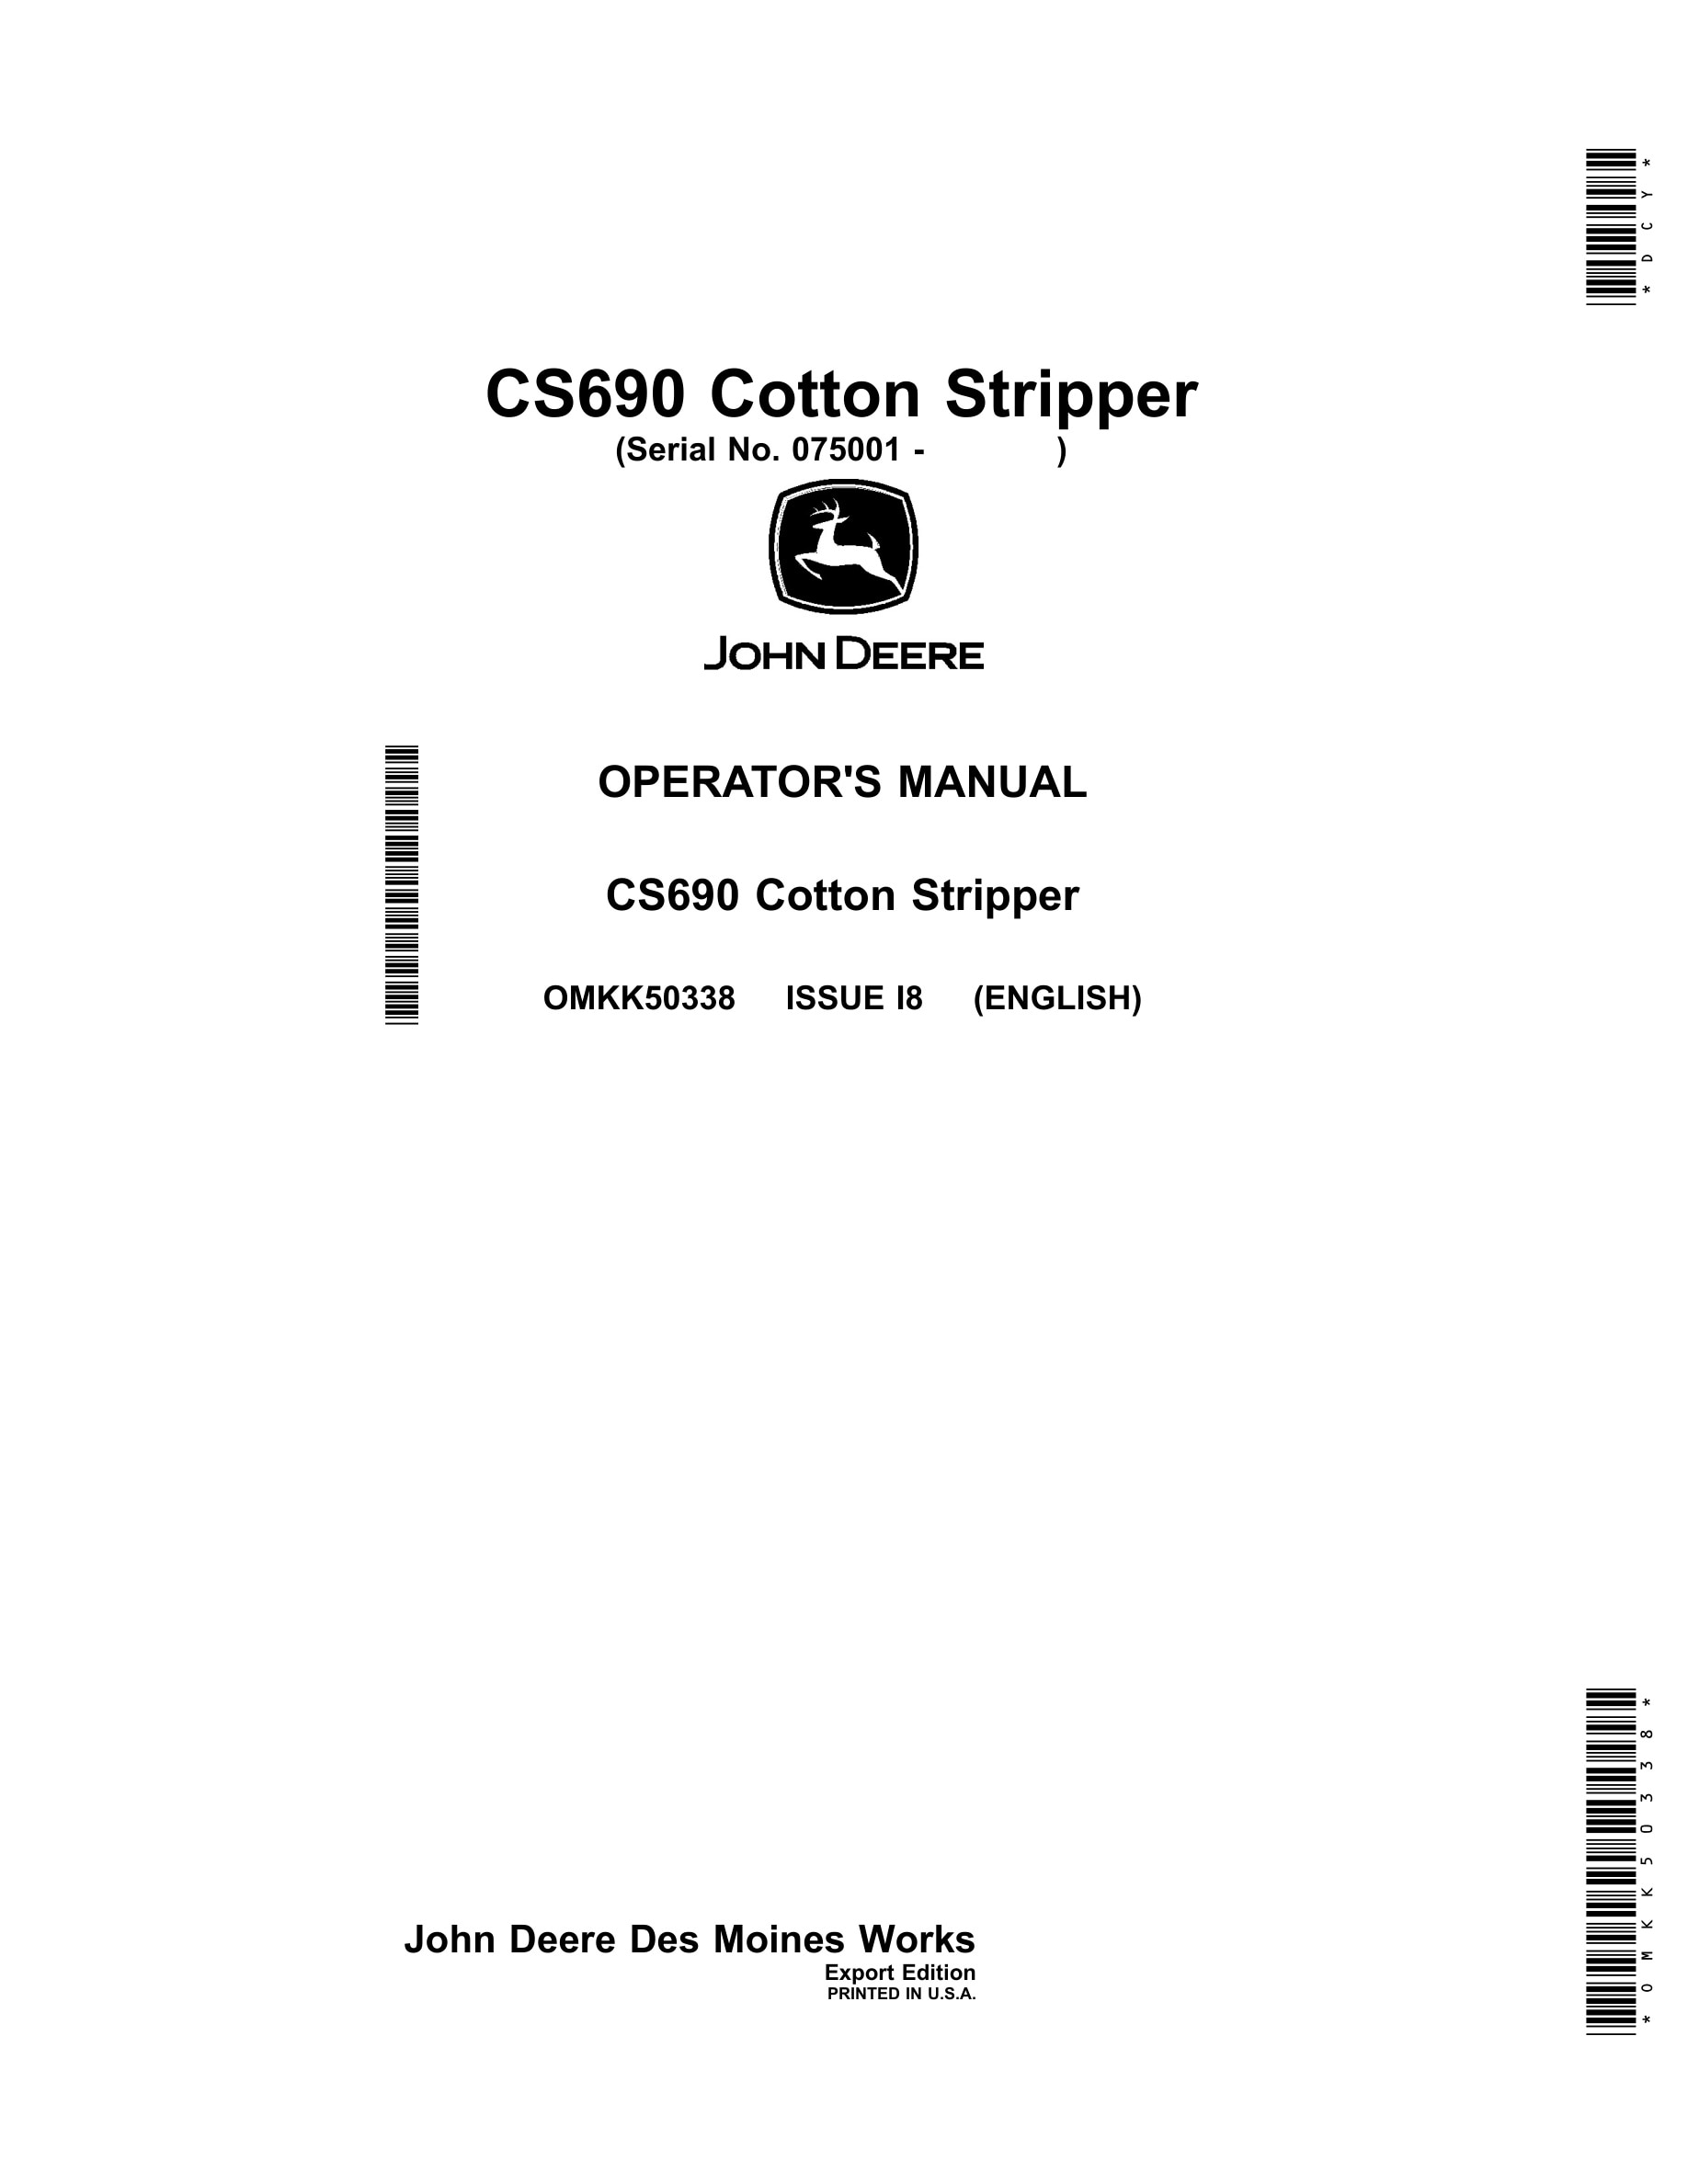 John Deere CS690 Cotton Stripper Operator Manual OMKK50338-1